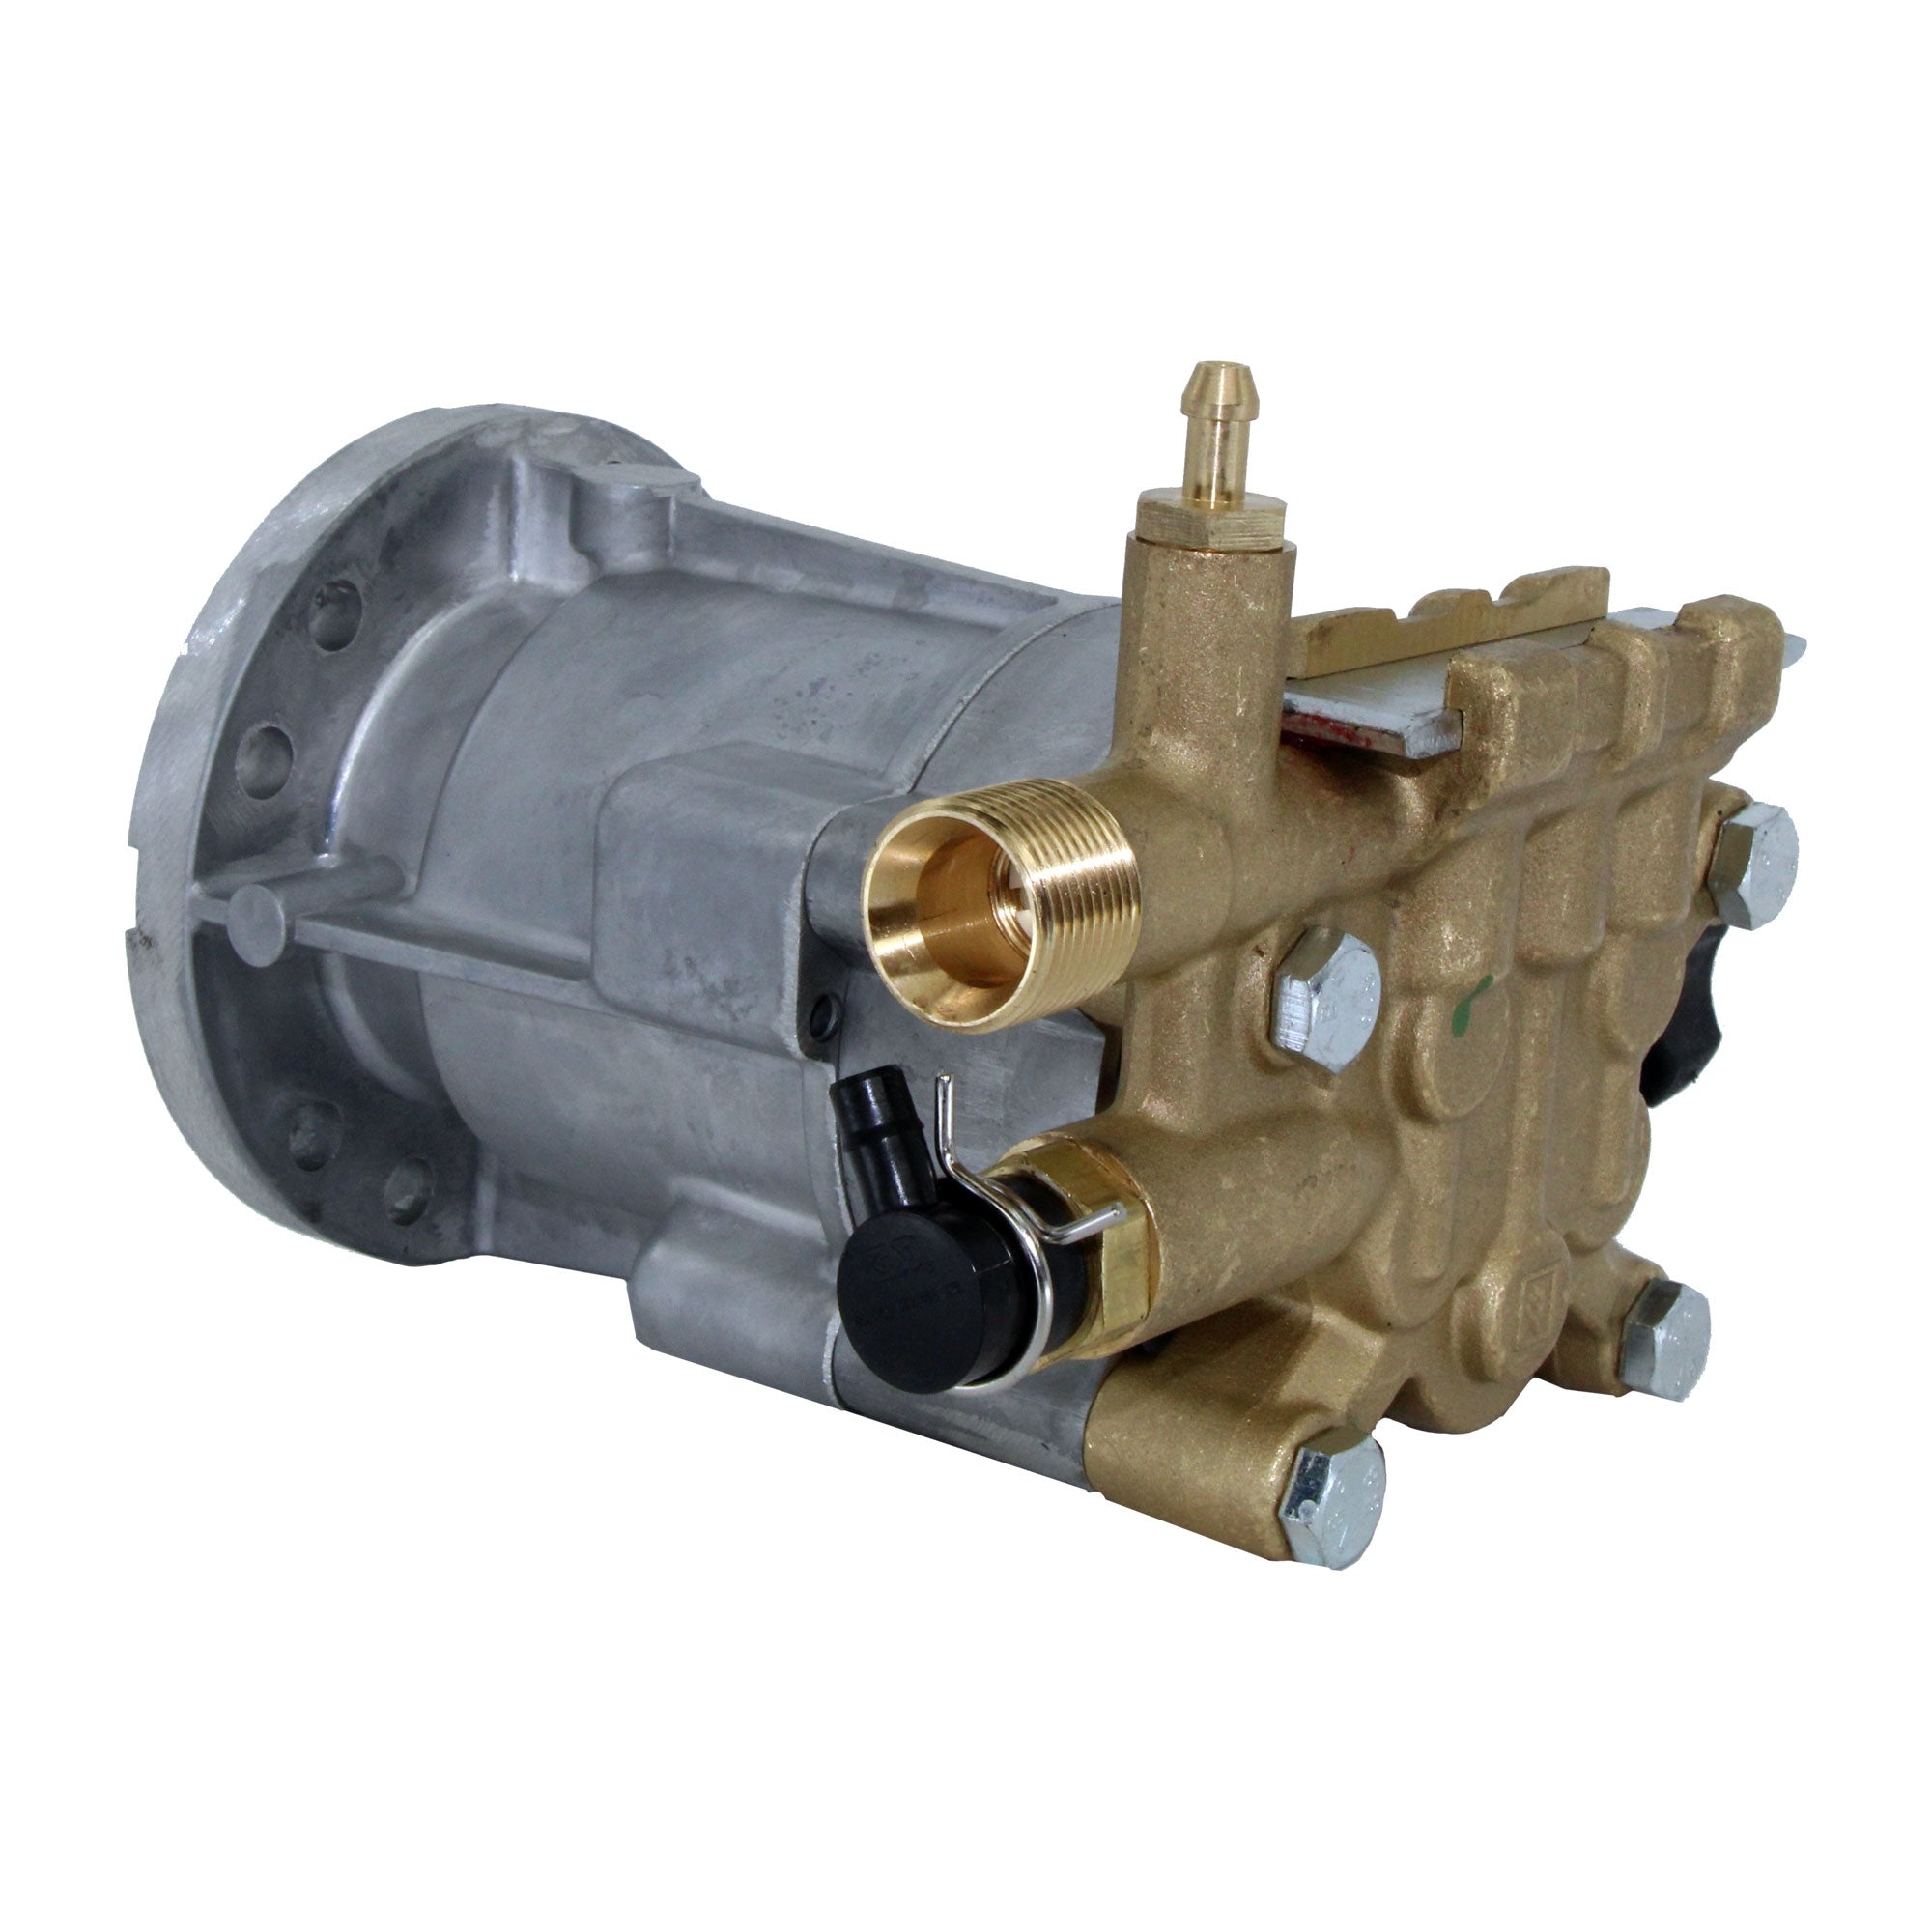 Kracher Pressure Washer Pump Replacement For Sale In Anacortes, WA OfferUp